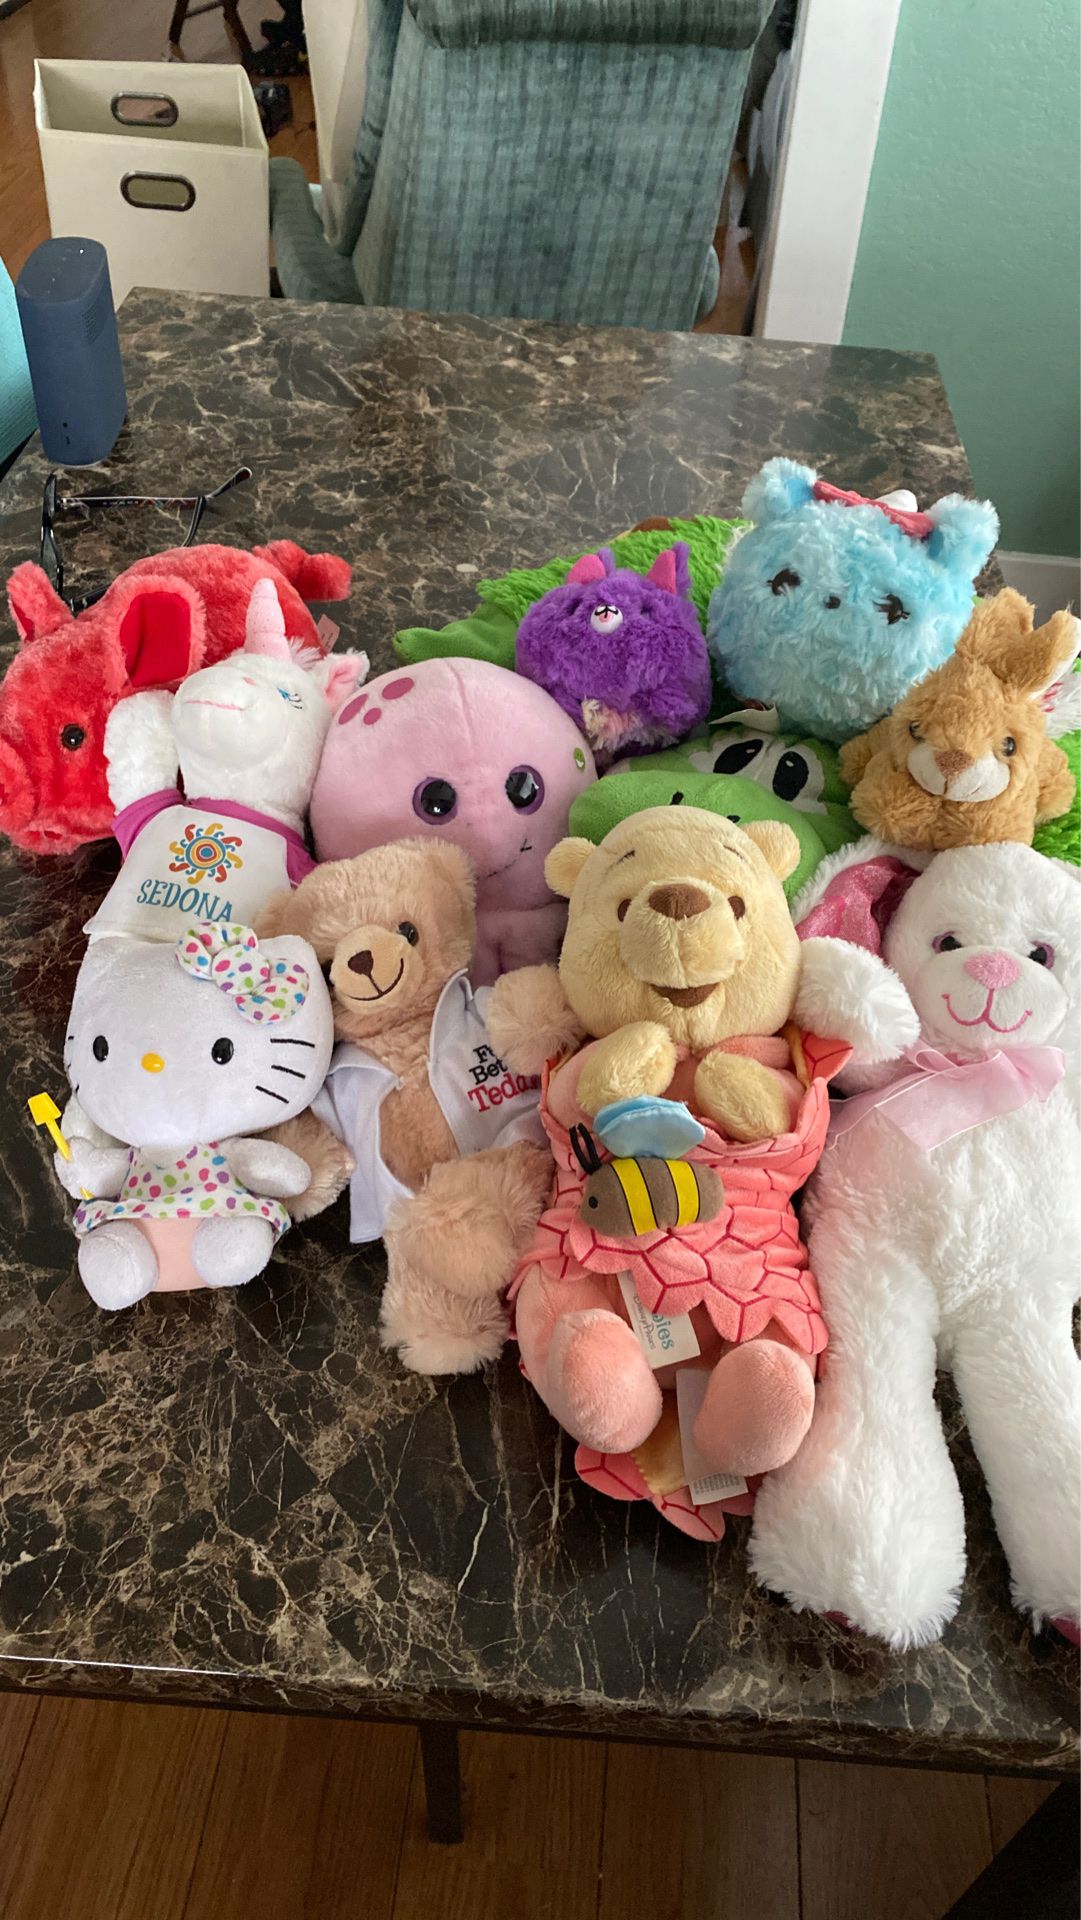 Stuffed animals - Winnie the Pooh, Yoshi, Hello Kitty and others